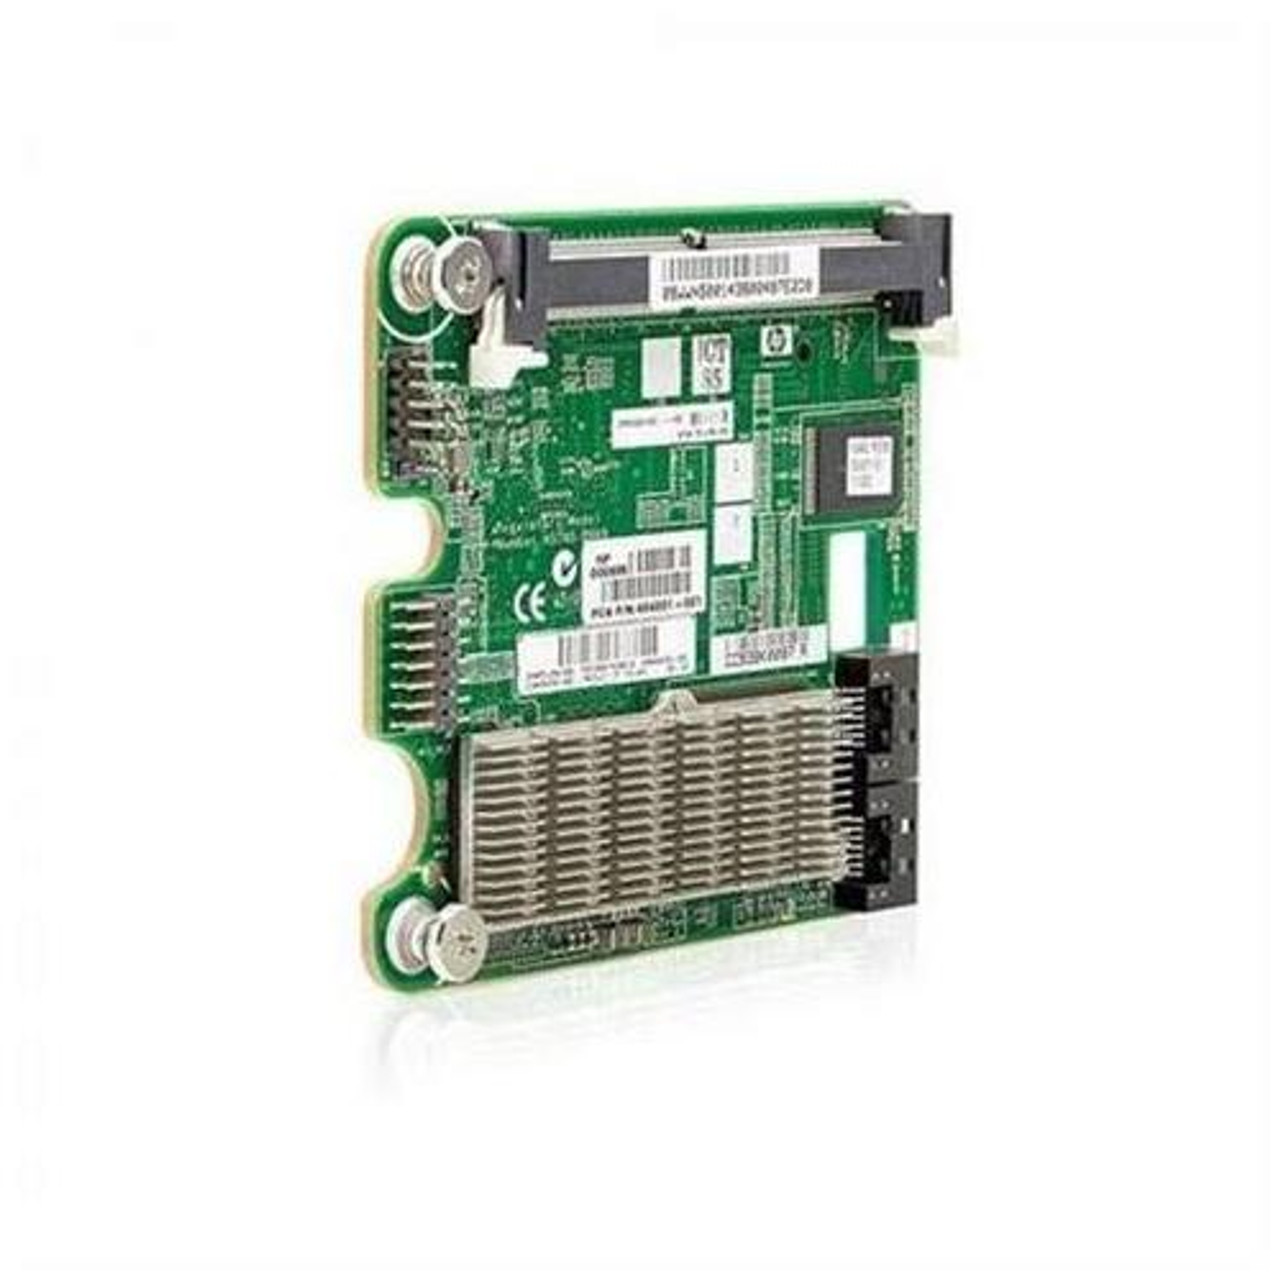 417569-001 - HP Smart Array E200i Plus Serial Attached SCSI (SAS) 128MB Cache Mezzanine RAID Controller Card